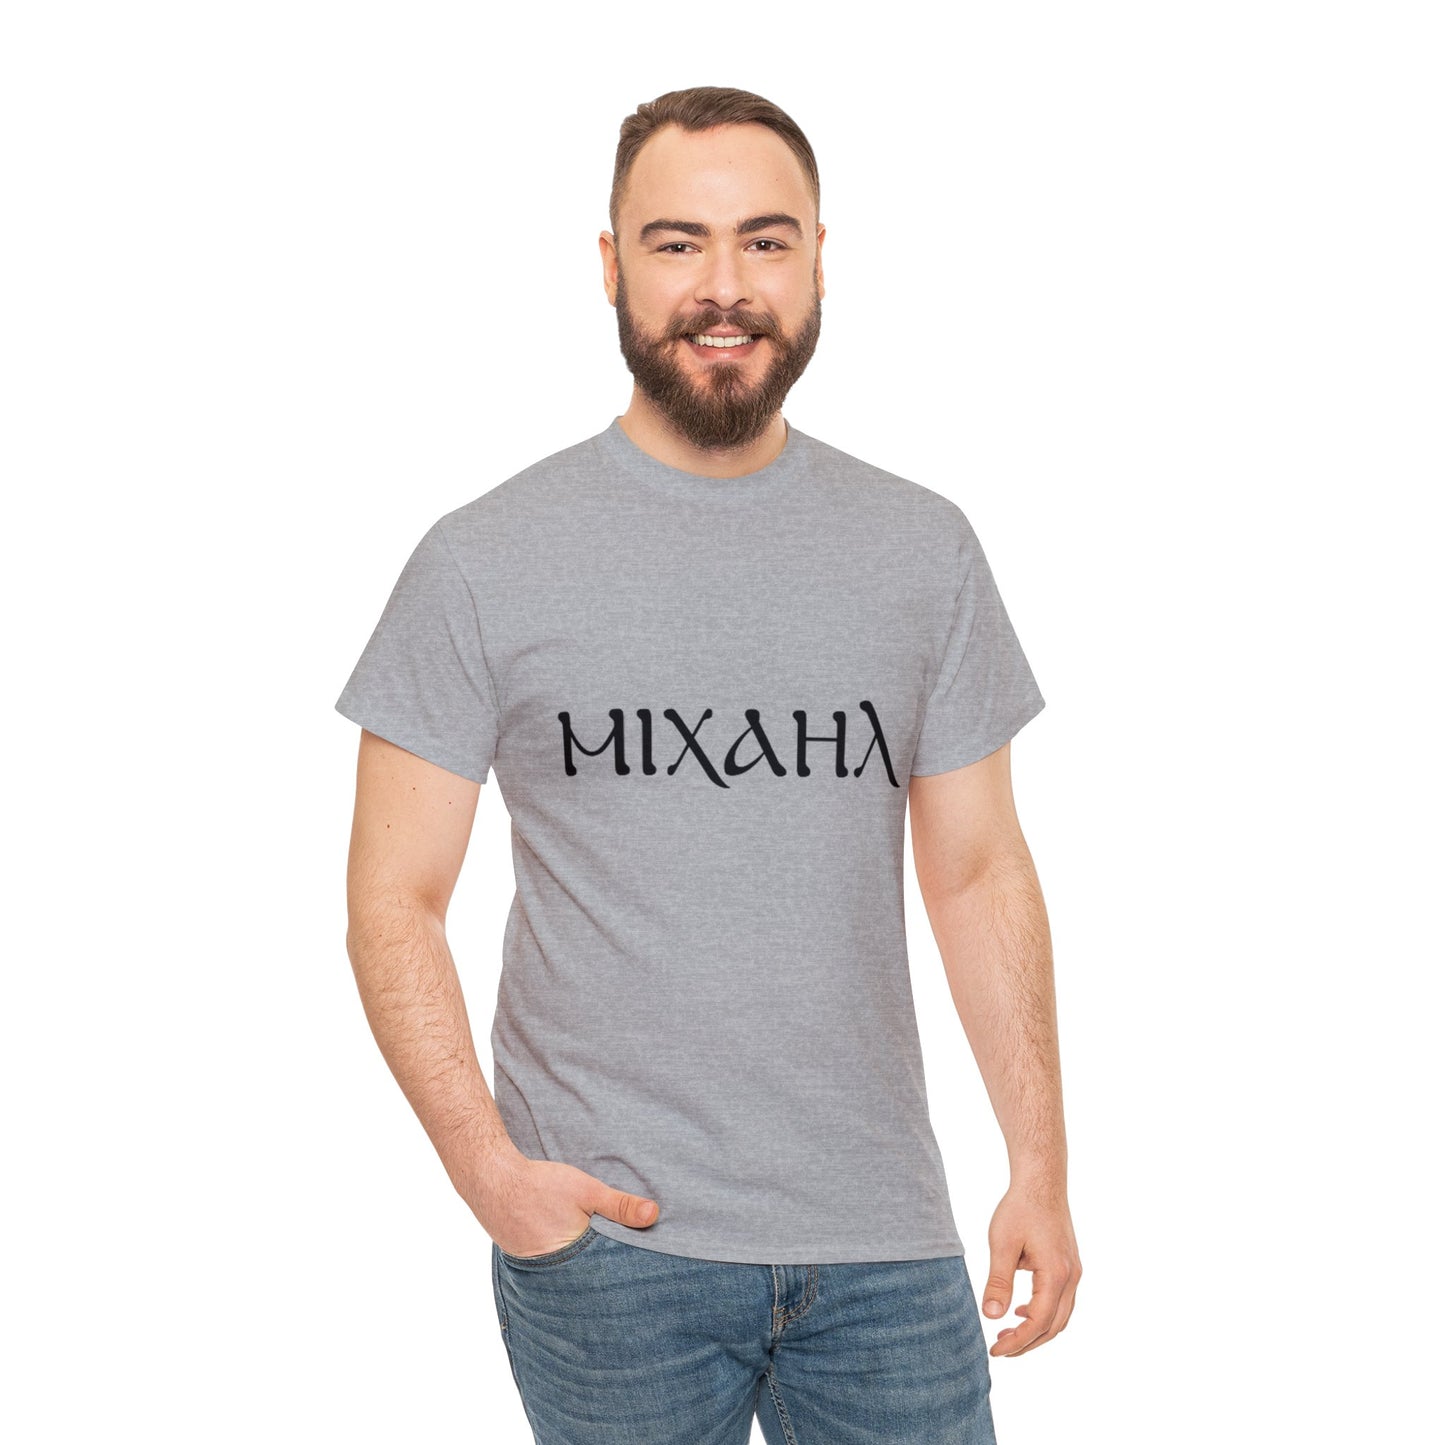 "Michael" T-shirt